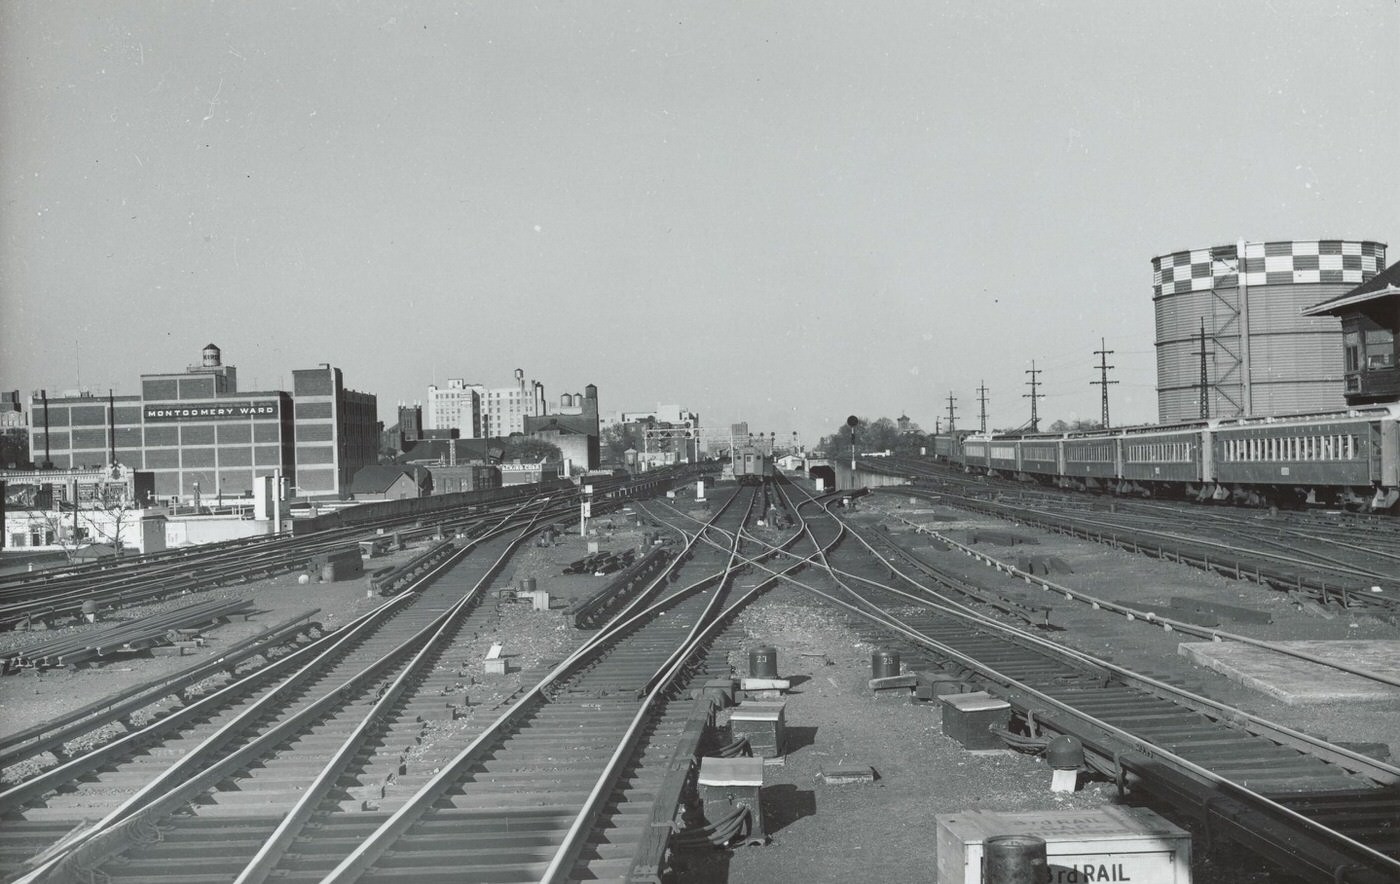 Jamaica Railroad Station Tracks, 1950S.